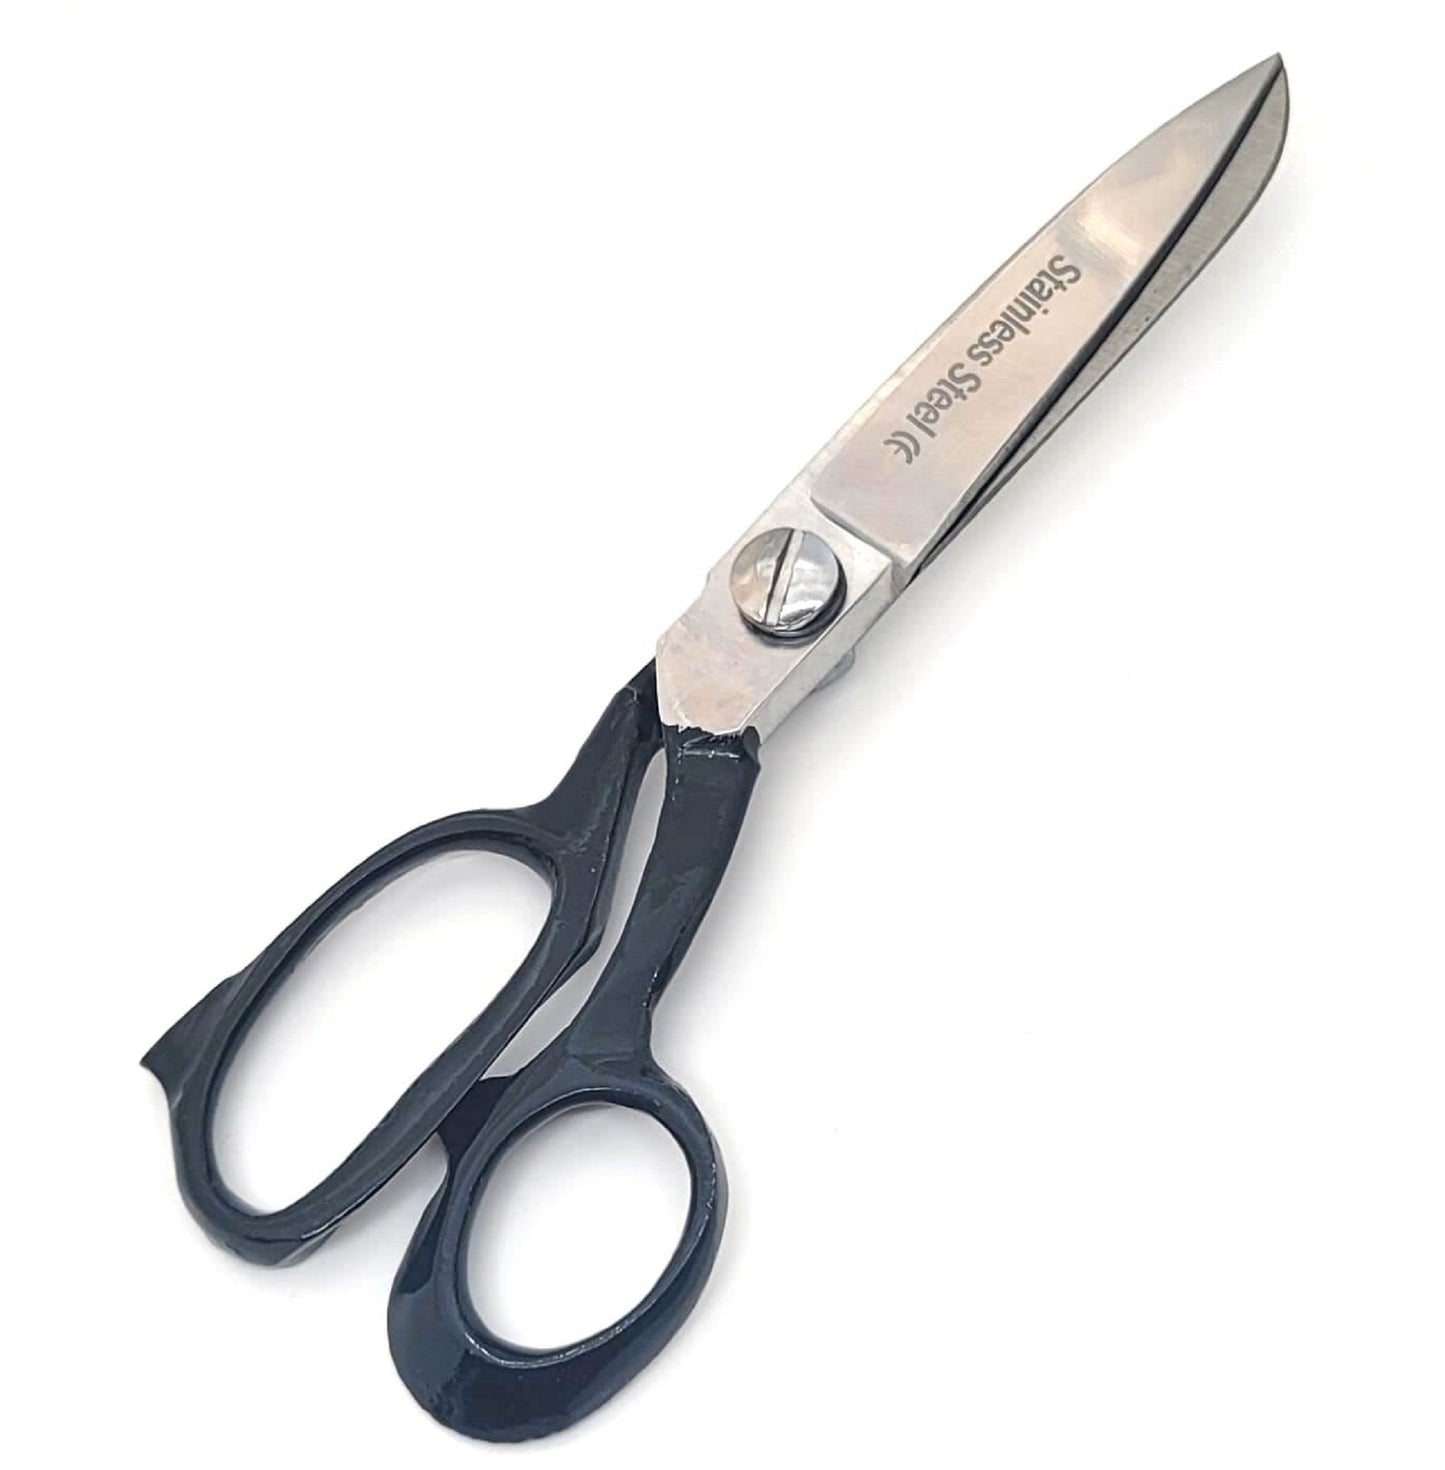 7 Inch Long Heavy Duty Stainless Steel Tailor Scissors Black Handle Fabric Shears